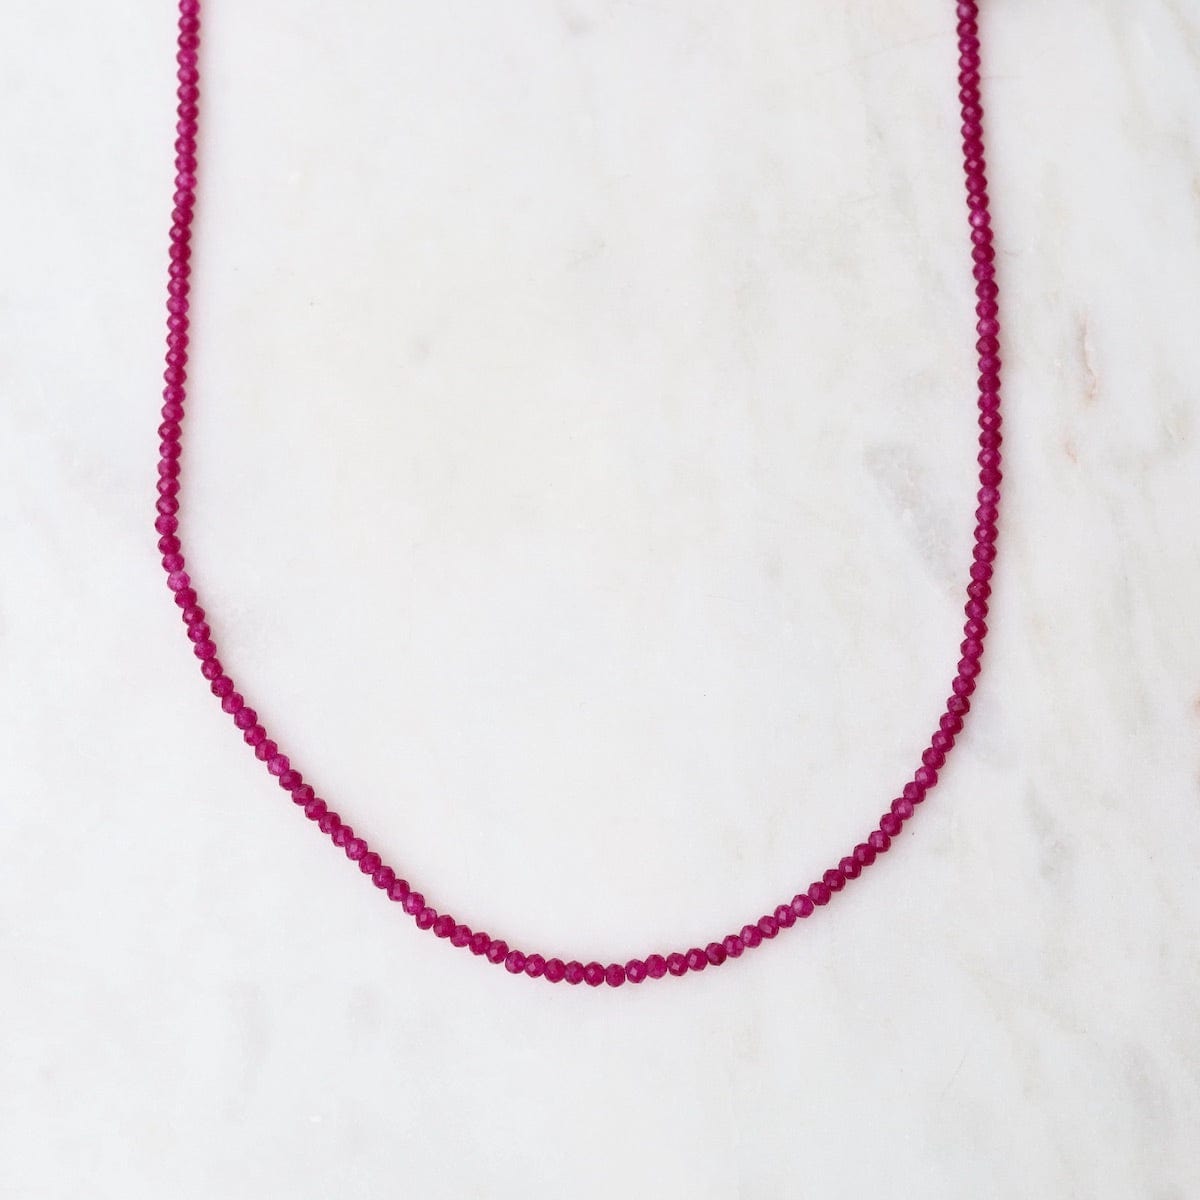 NKL Simple Stone Necklace - Rhodolite Garnet